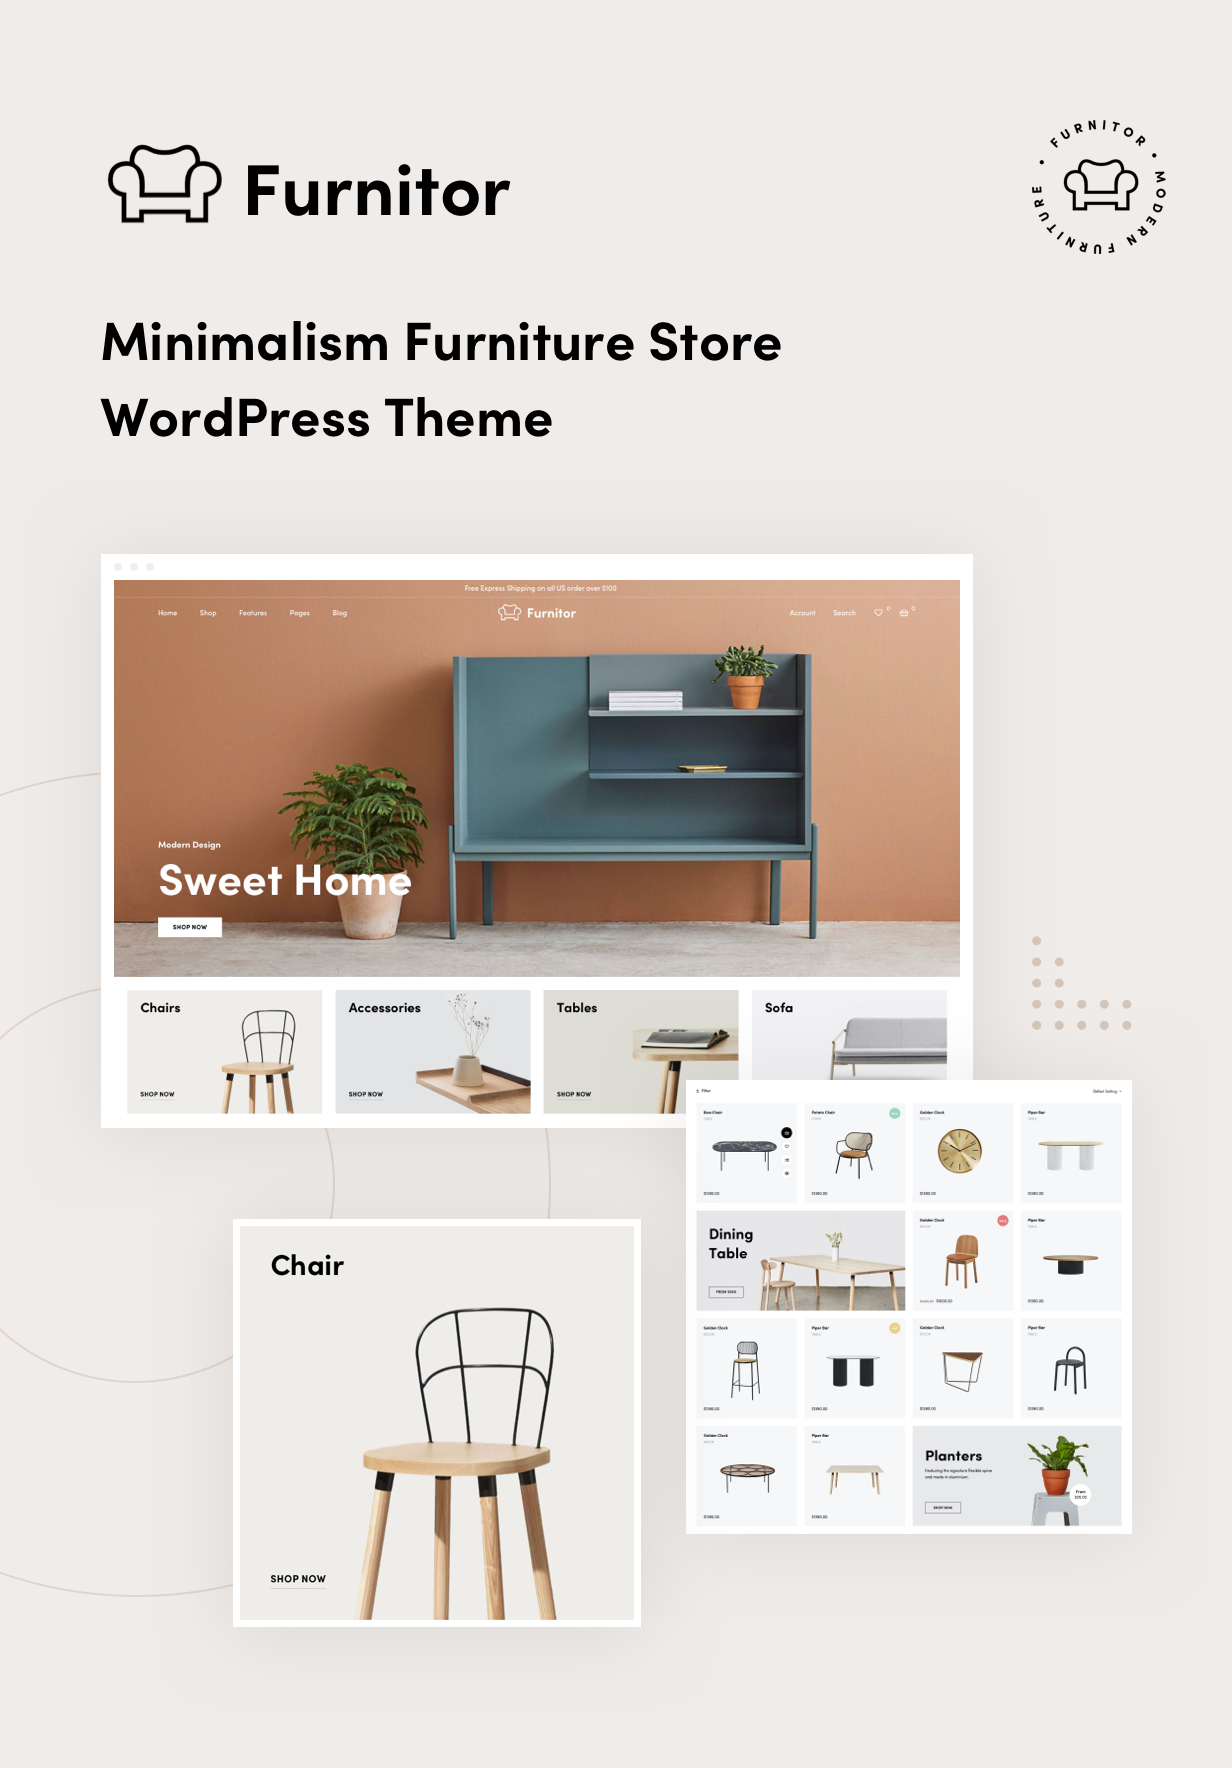 Furnitor – Minimalism Furniture Store WordPress Theme - 9